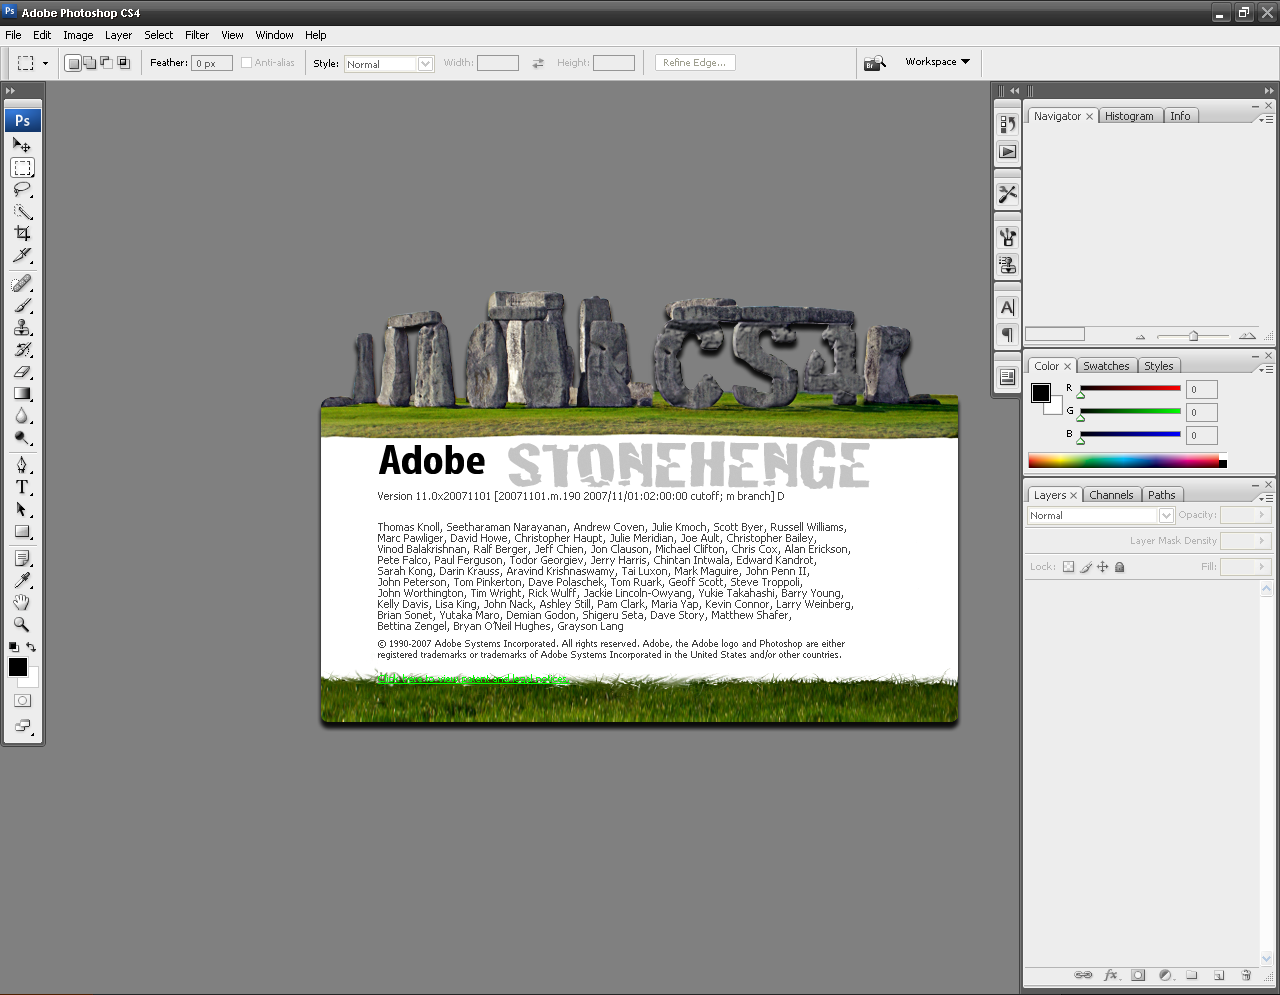 Adobe PhotoShop CS4